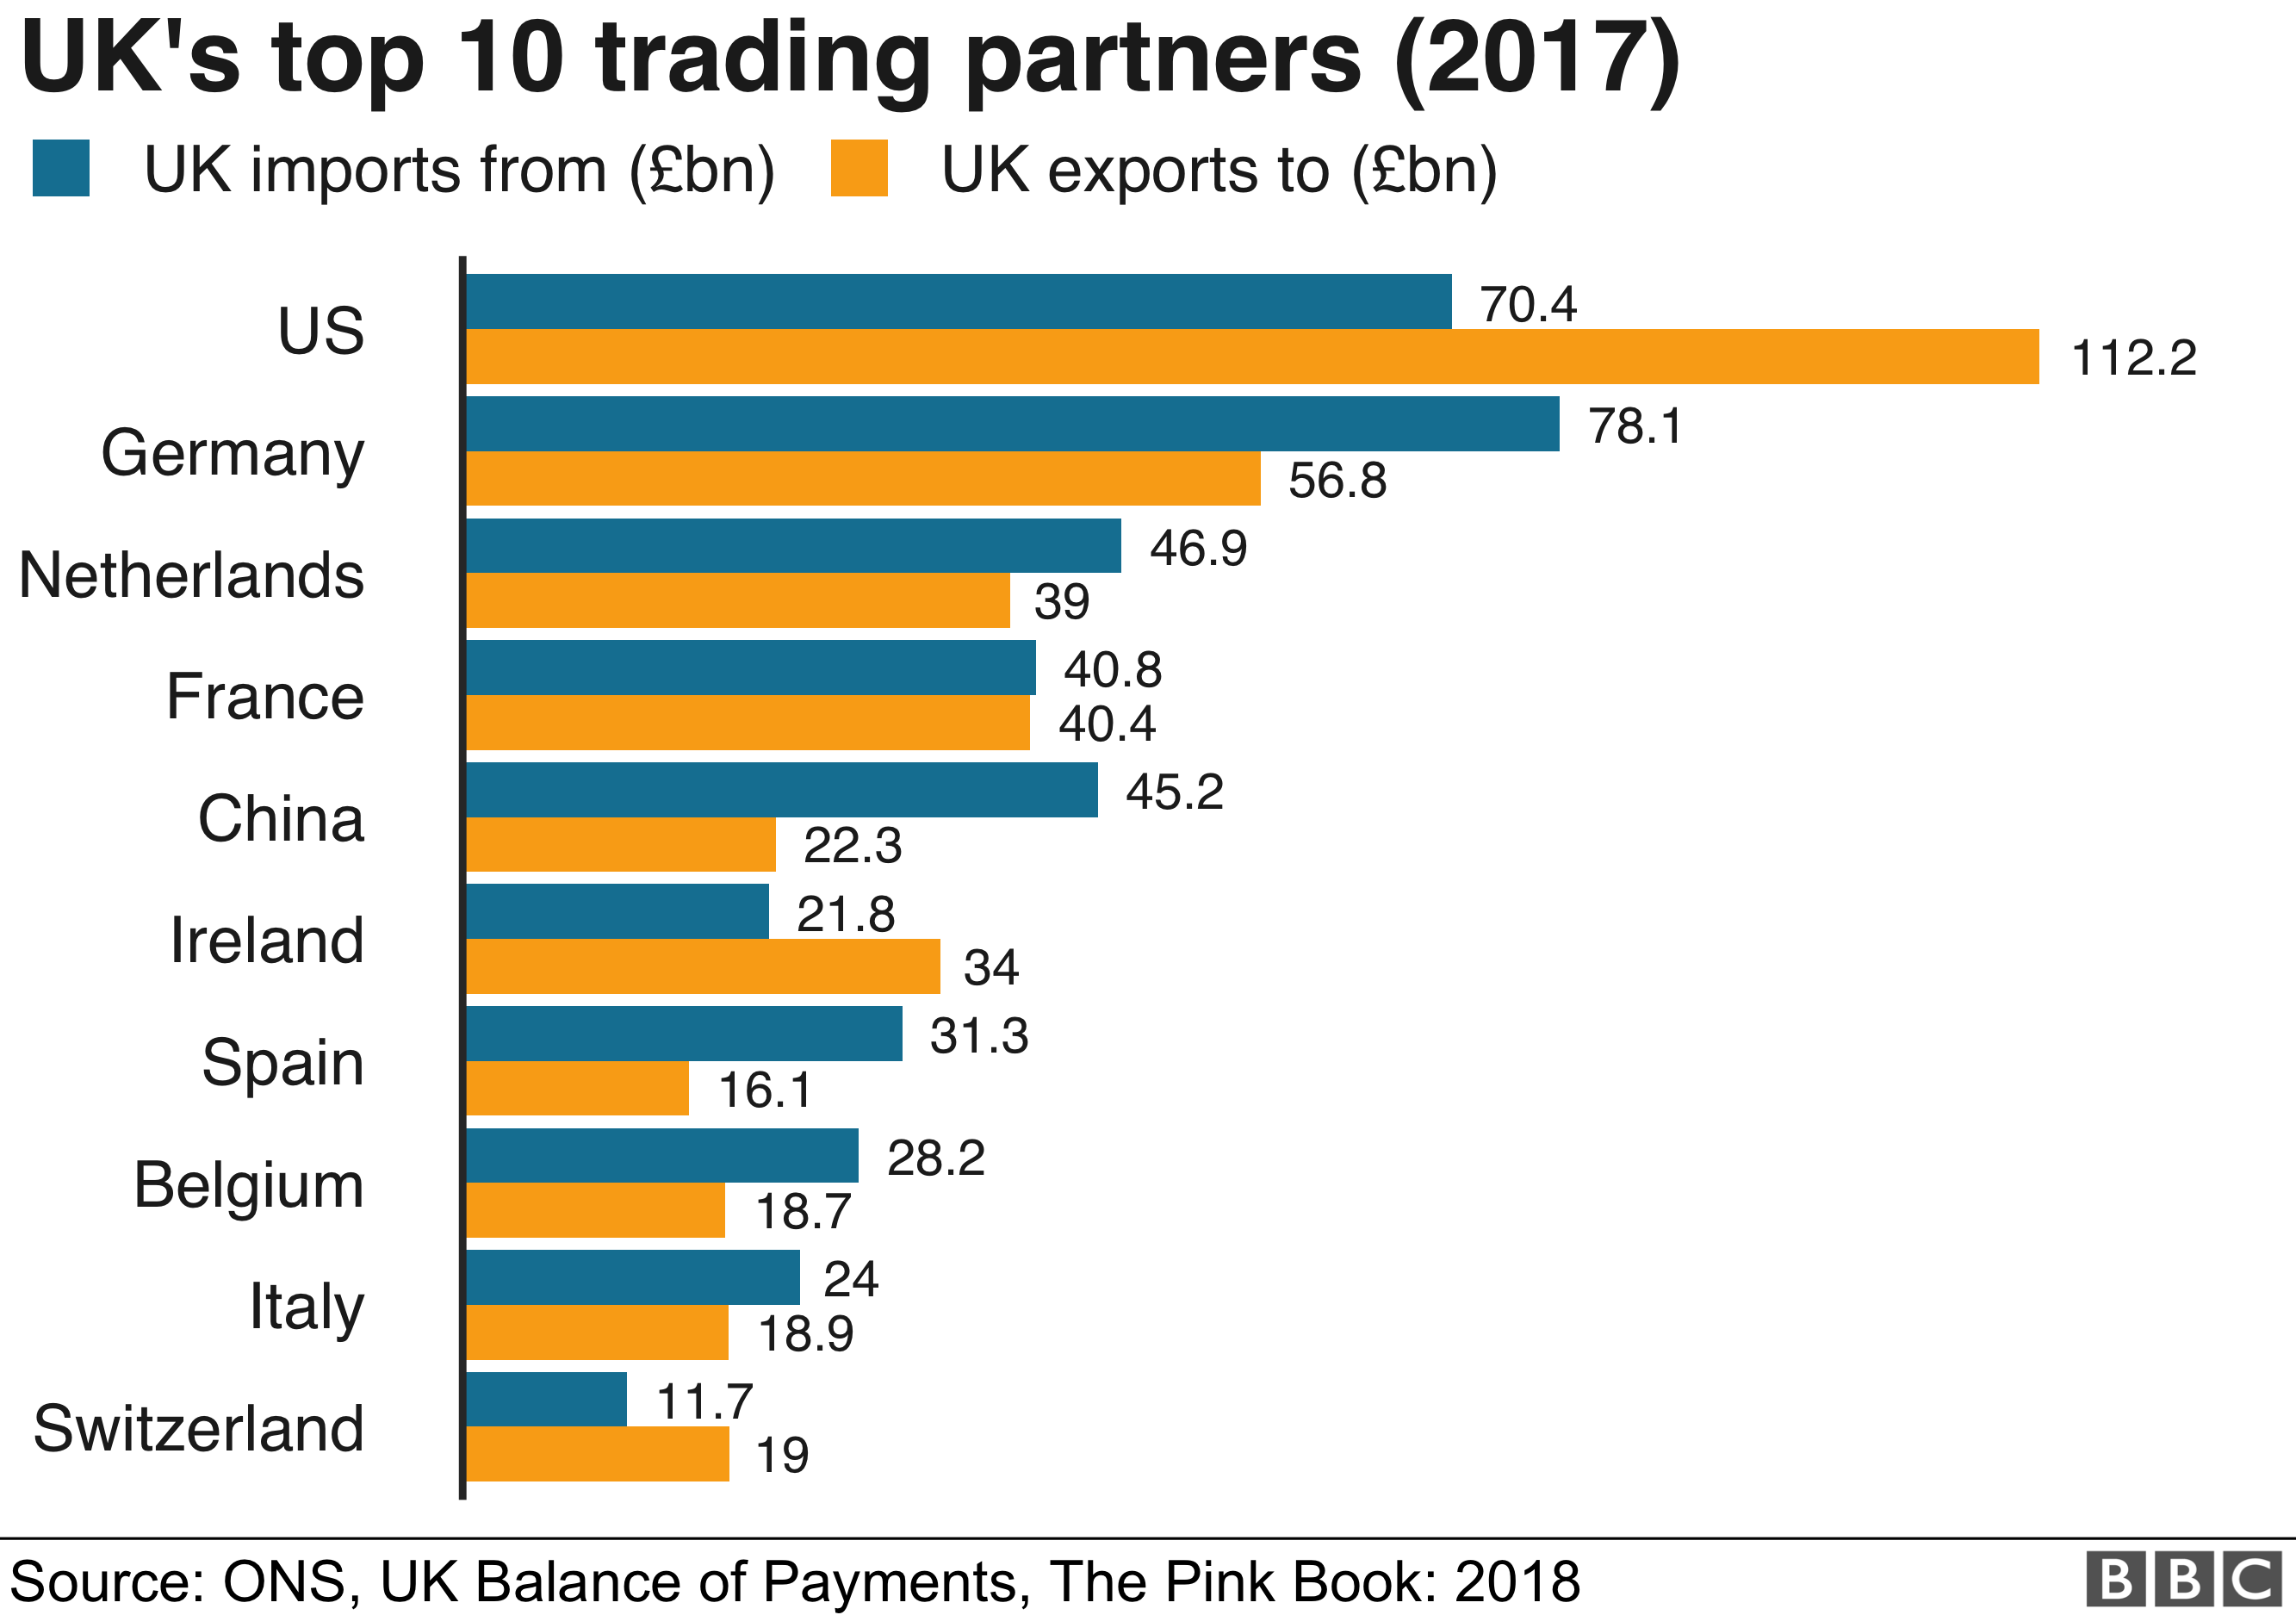 UK's main trading partners - bar chart